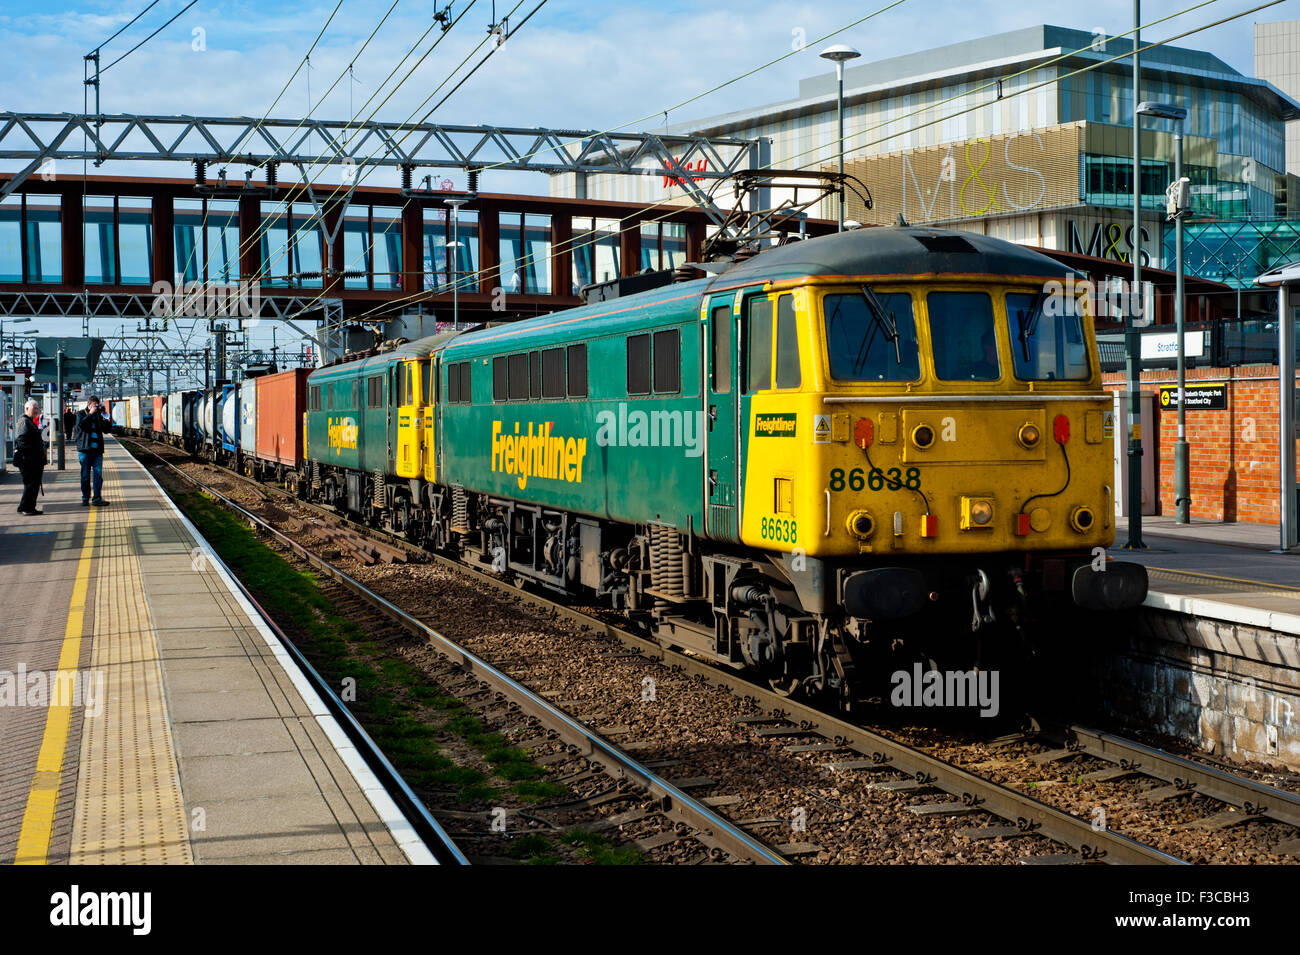 Freightliner train at Stratford, London Stock Photo